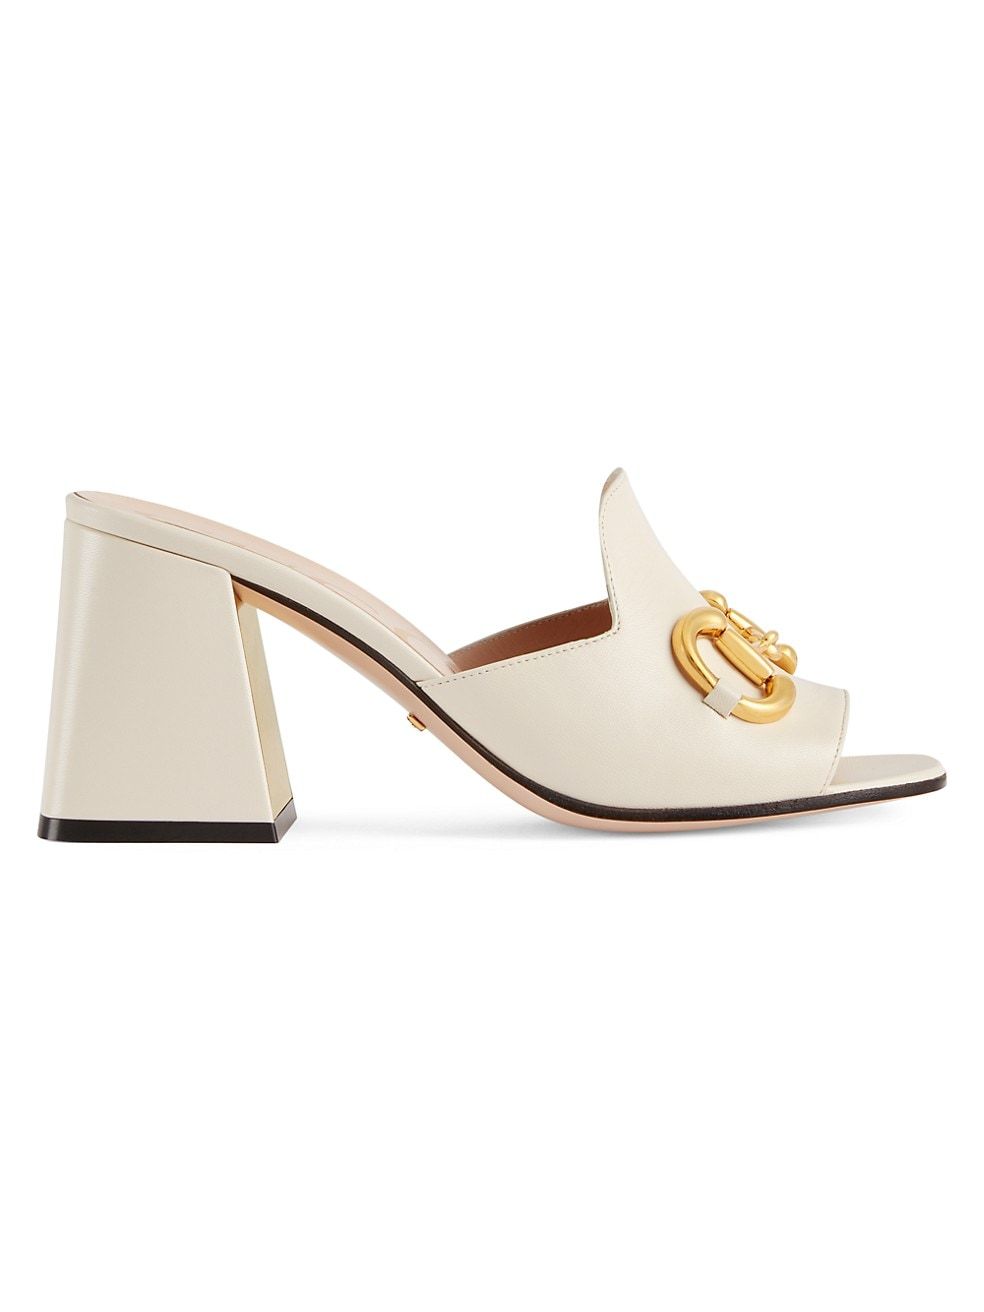 Gucci Slide Sandal With Horsebit | Saks Fifth Avenue